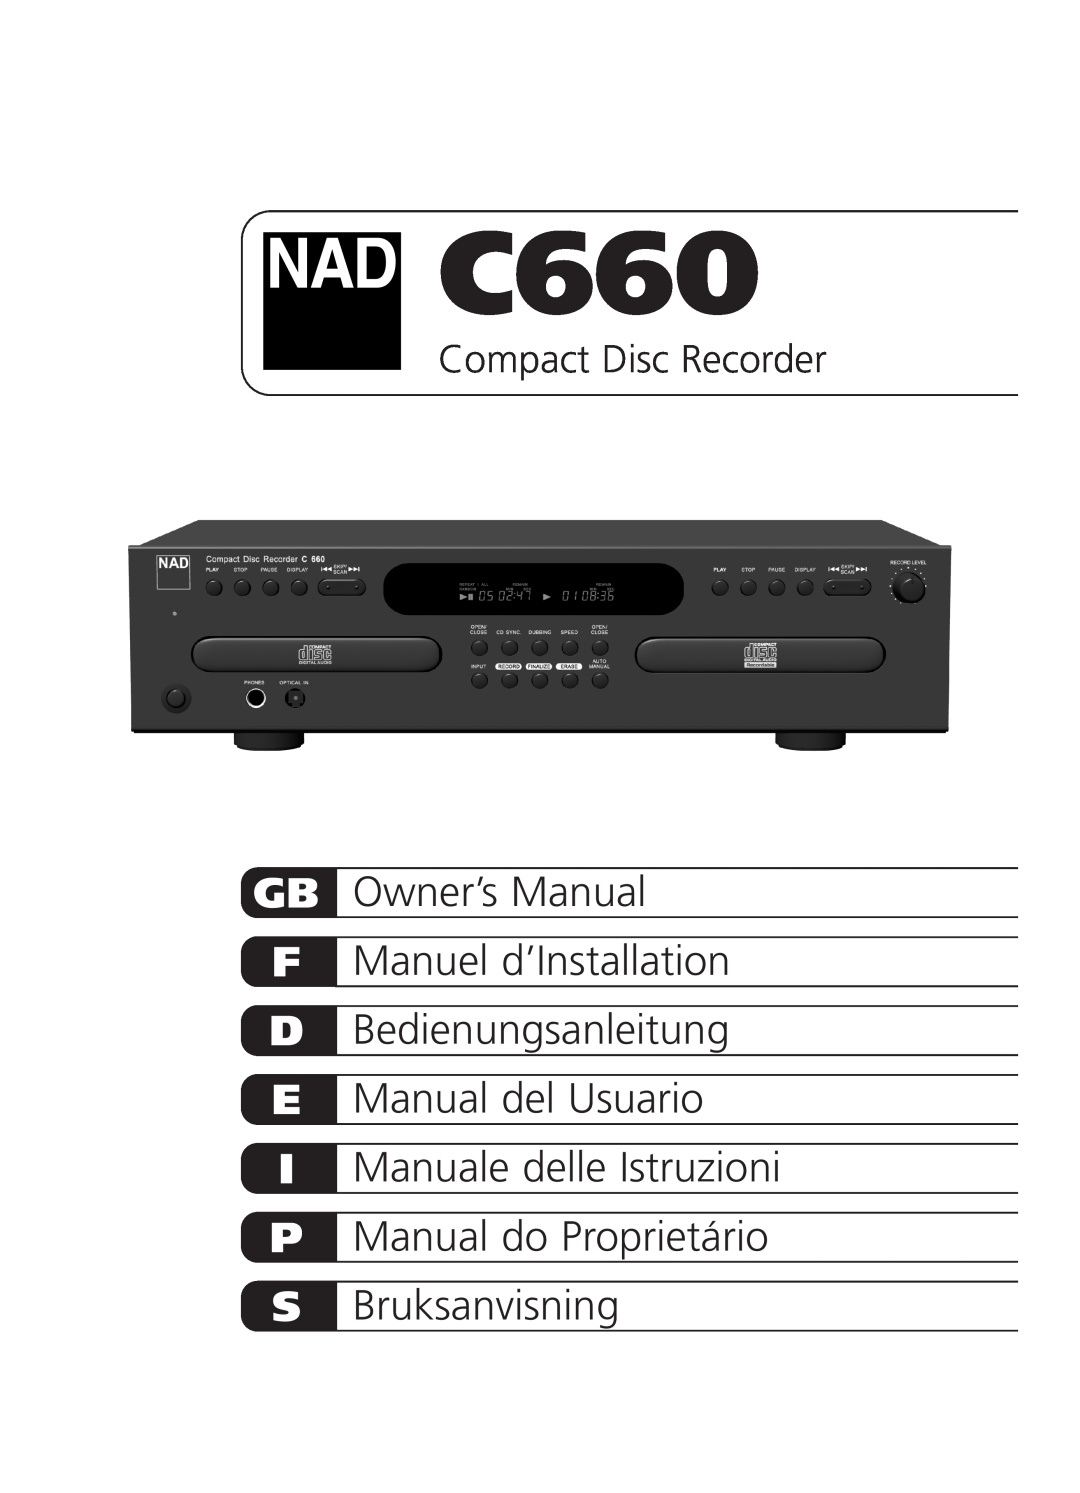 NAD C660 owner manual Gb F D E I P S, Bedienungsanleitung Manual del Usuario, Bruksanvisning, Compact Disc Recorder 